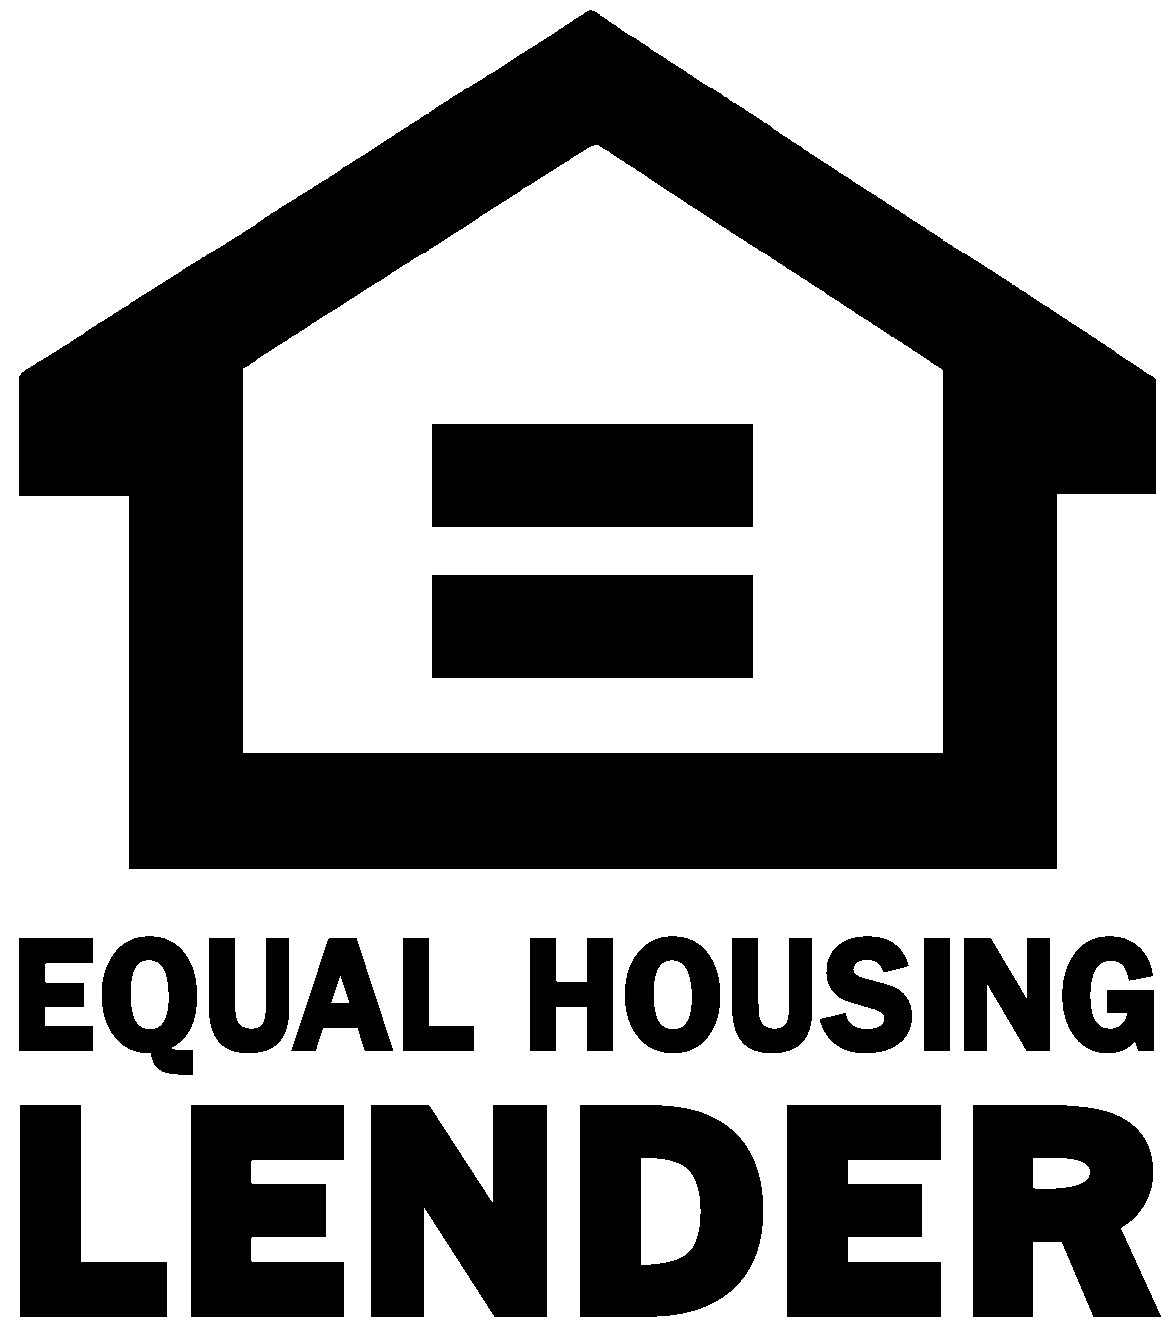 Fair Housing Logo - Equal housing lender Logos